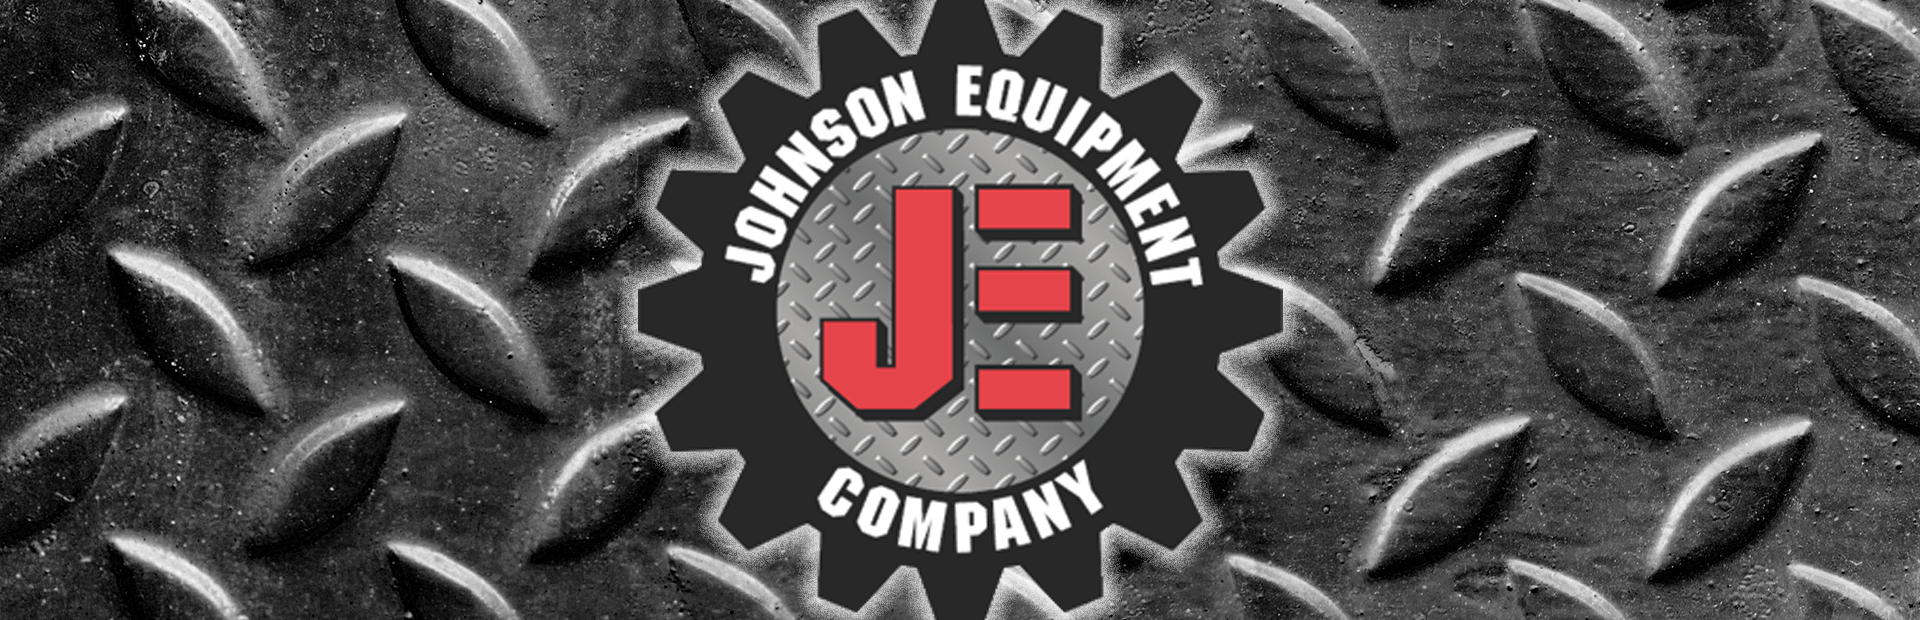 Johnson Equipment - Tulsa, Oklahoma